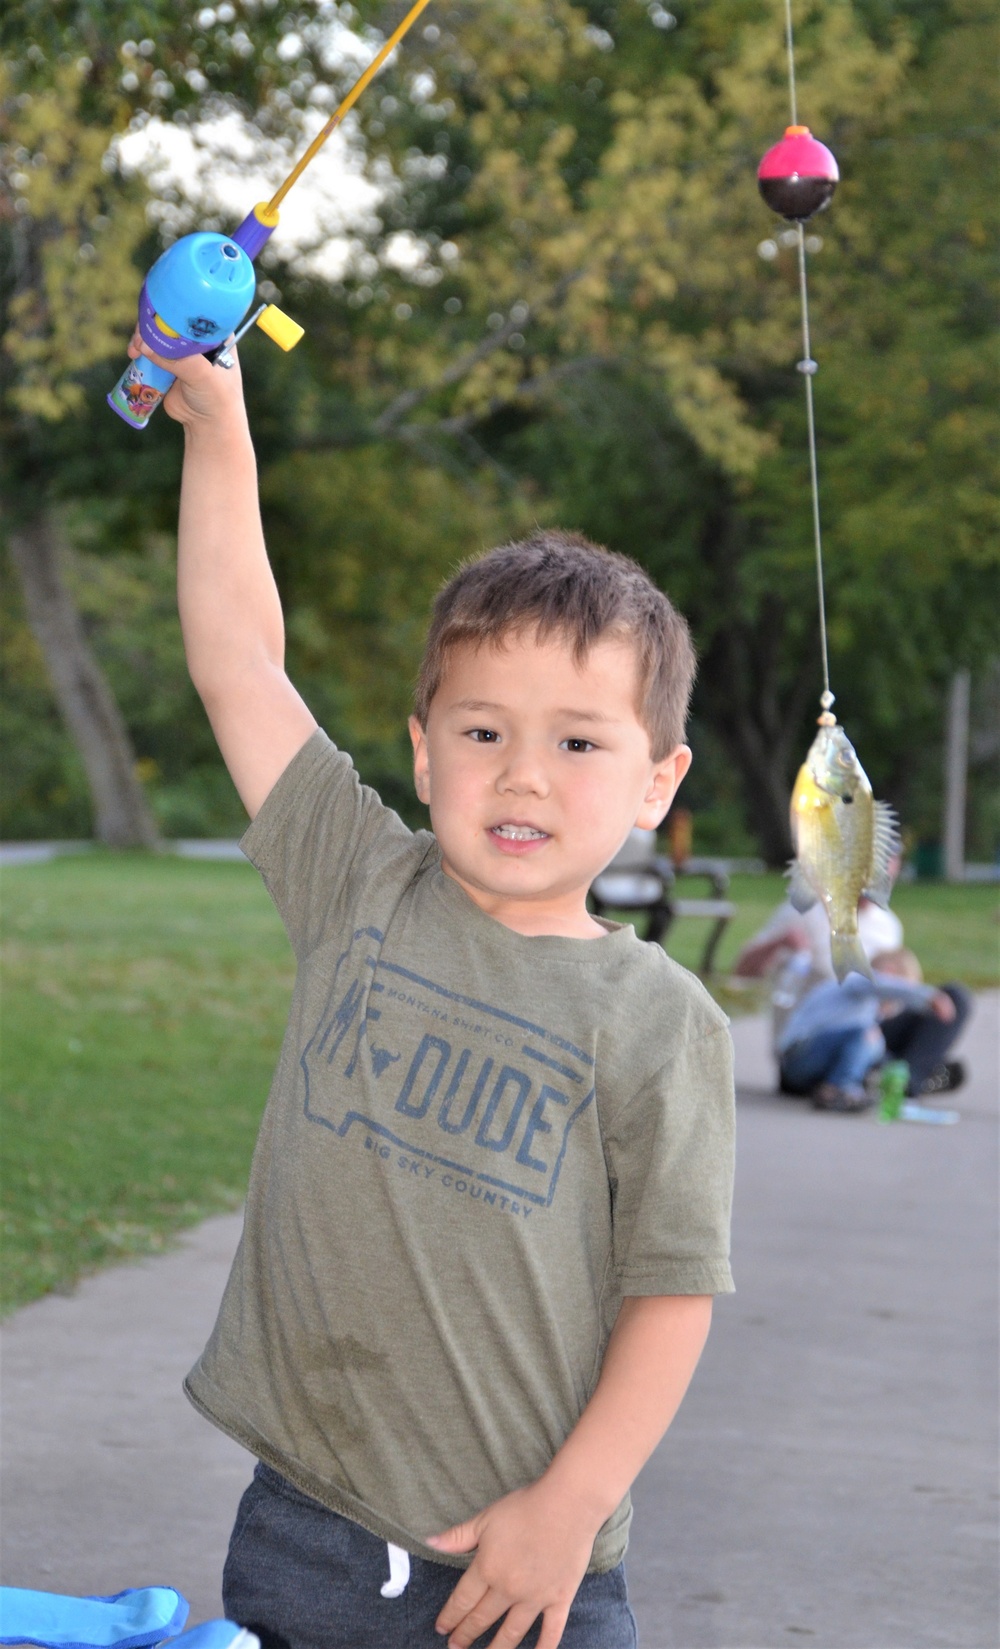 DVIDS - News - ACS Fatherhood program hooks dads, kids for fishing fun